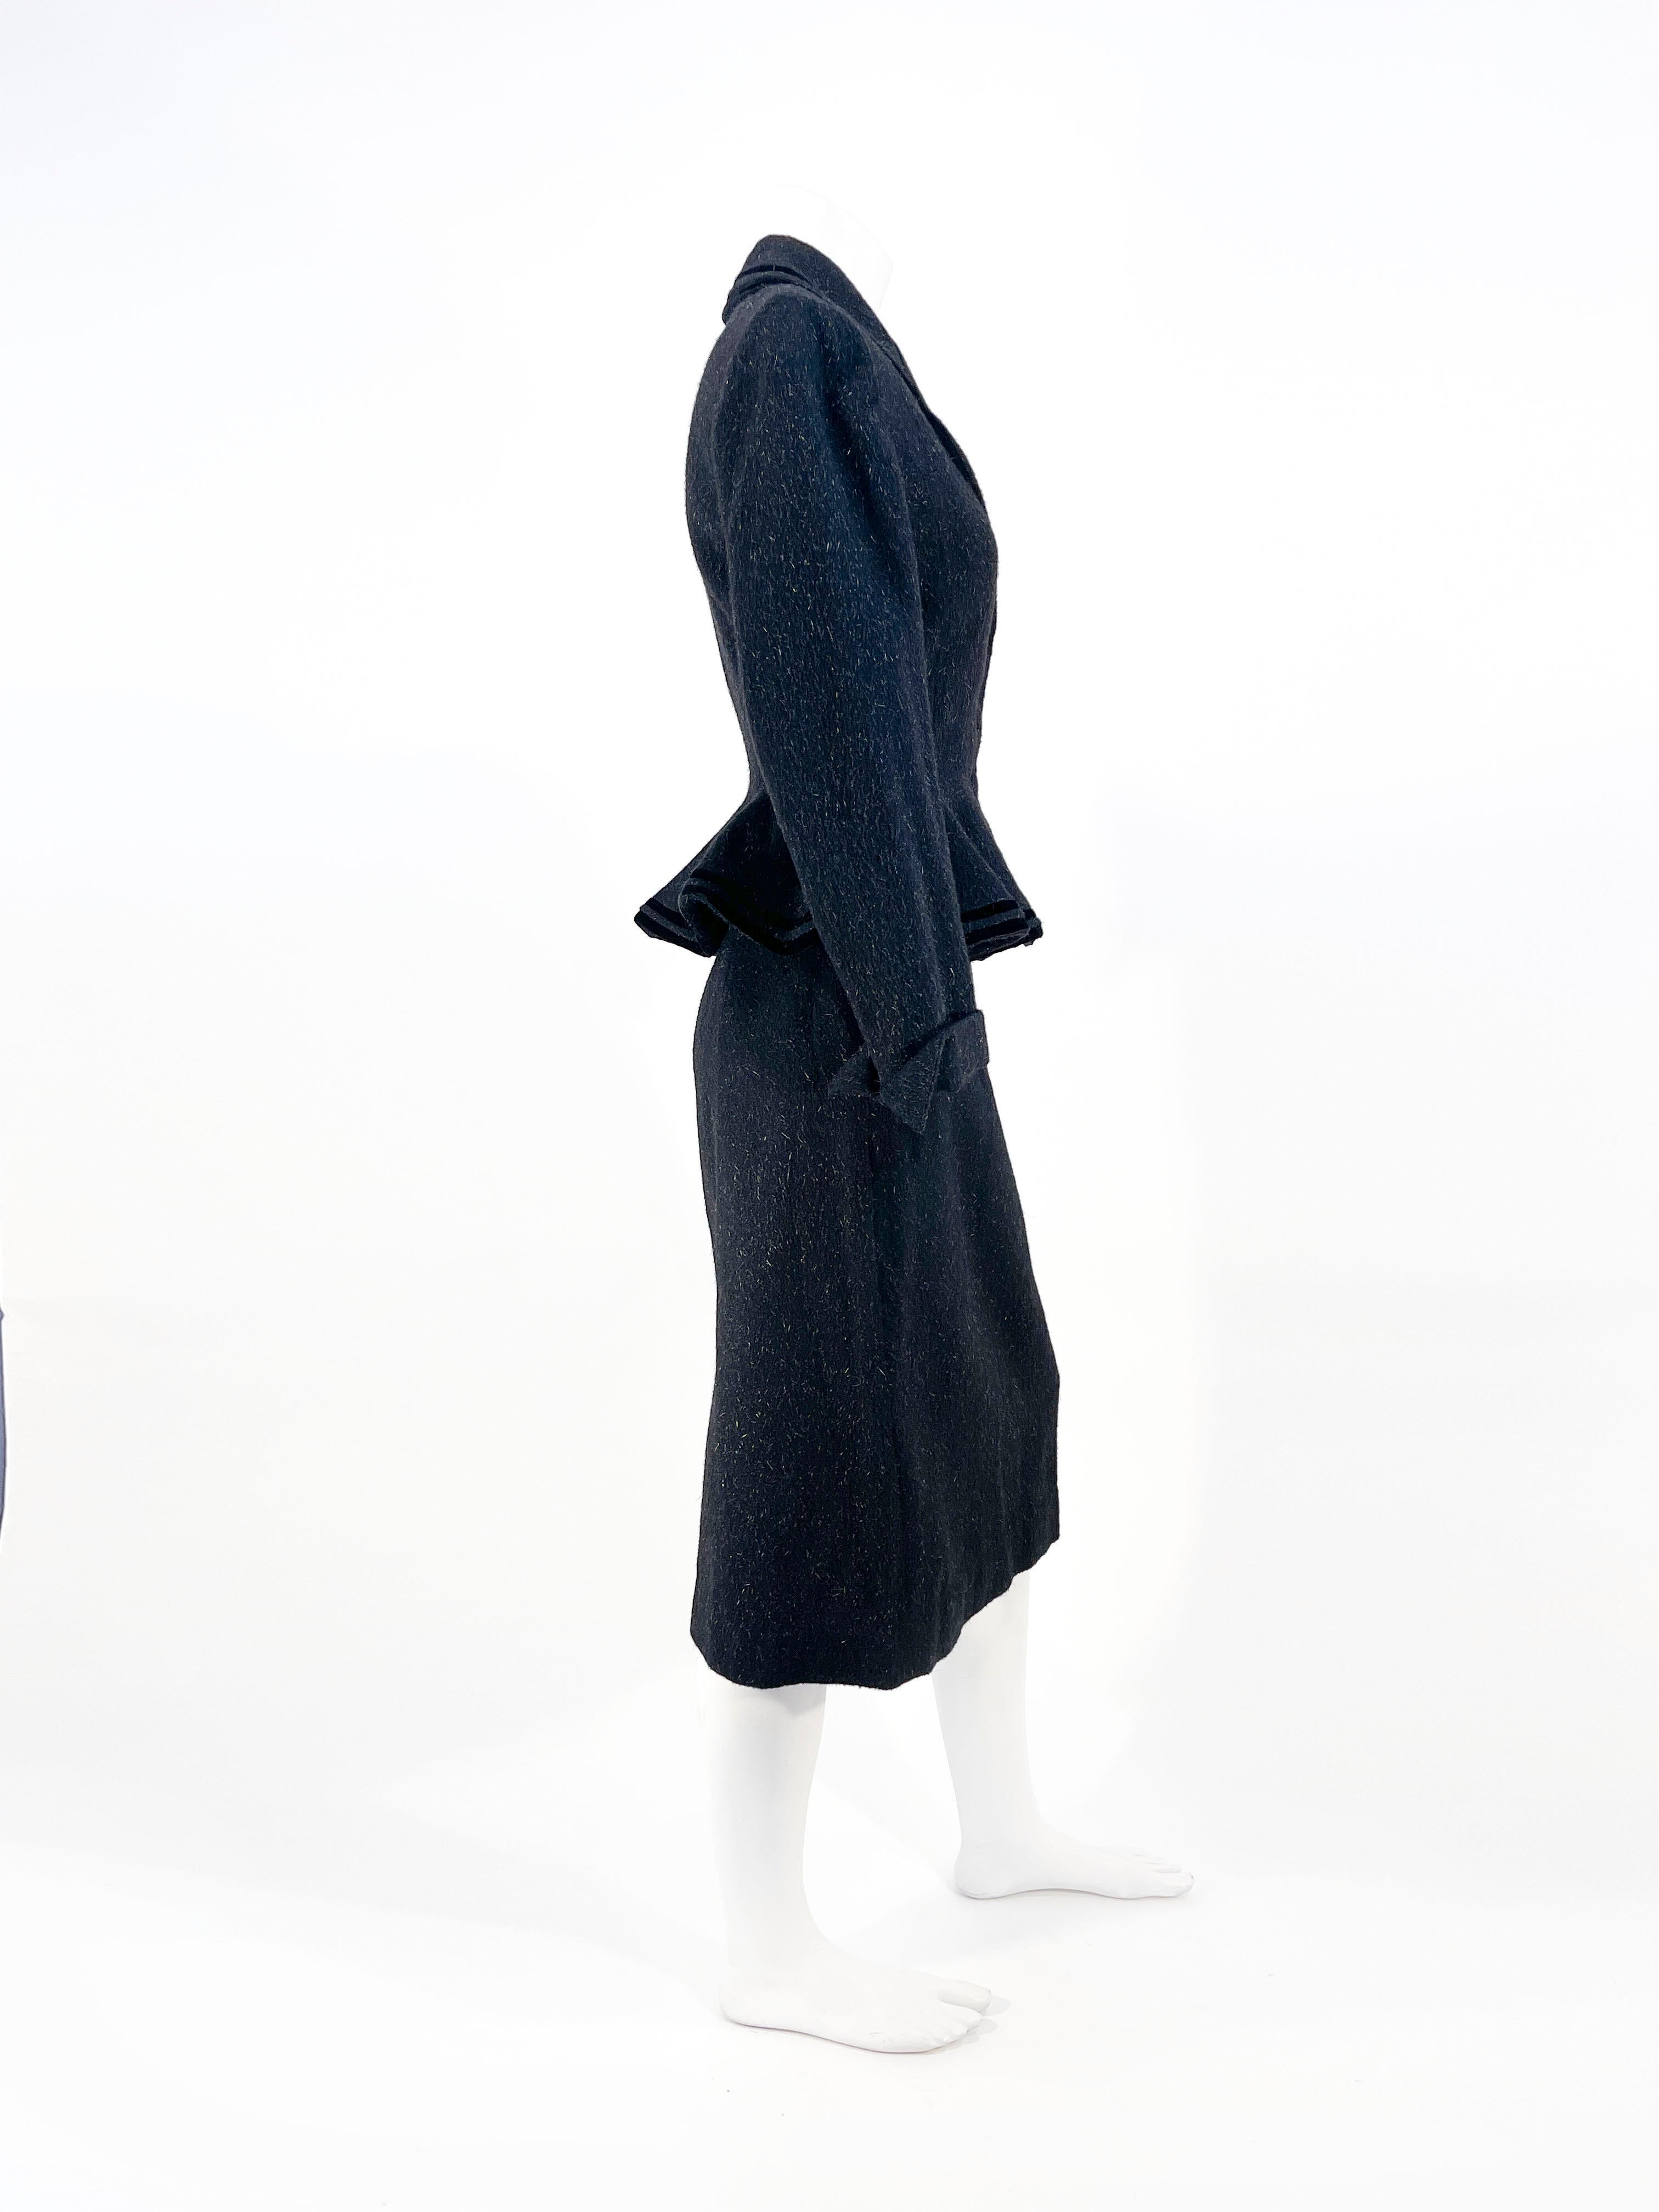 Women's 1940s/1950s Lilli Ann Black Wool Suit